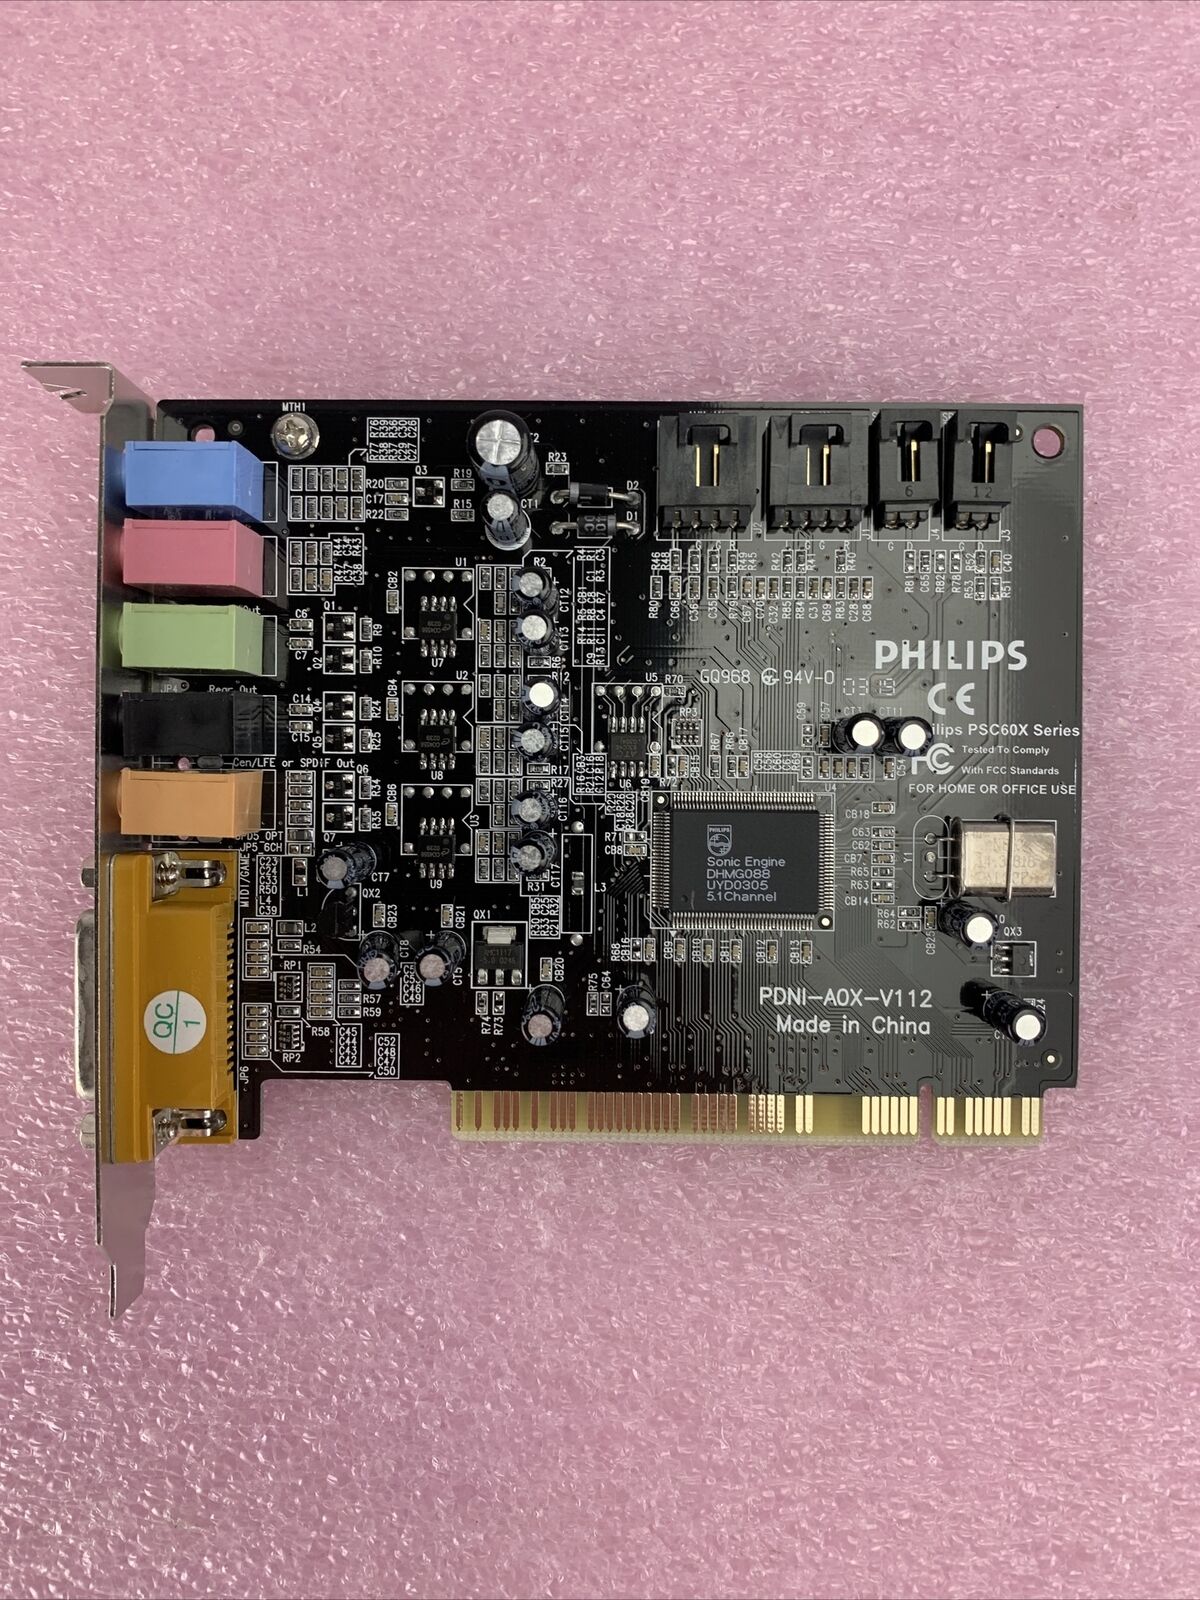 Philips PDNI-A0X-V112 Audio Card